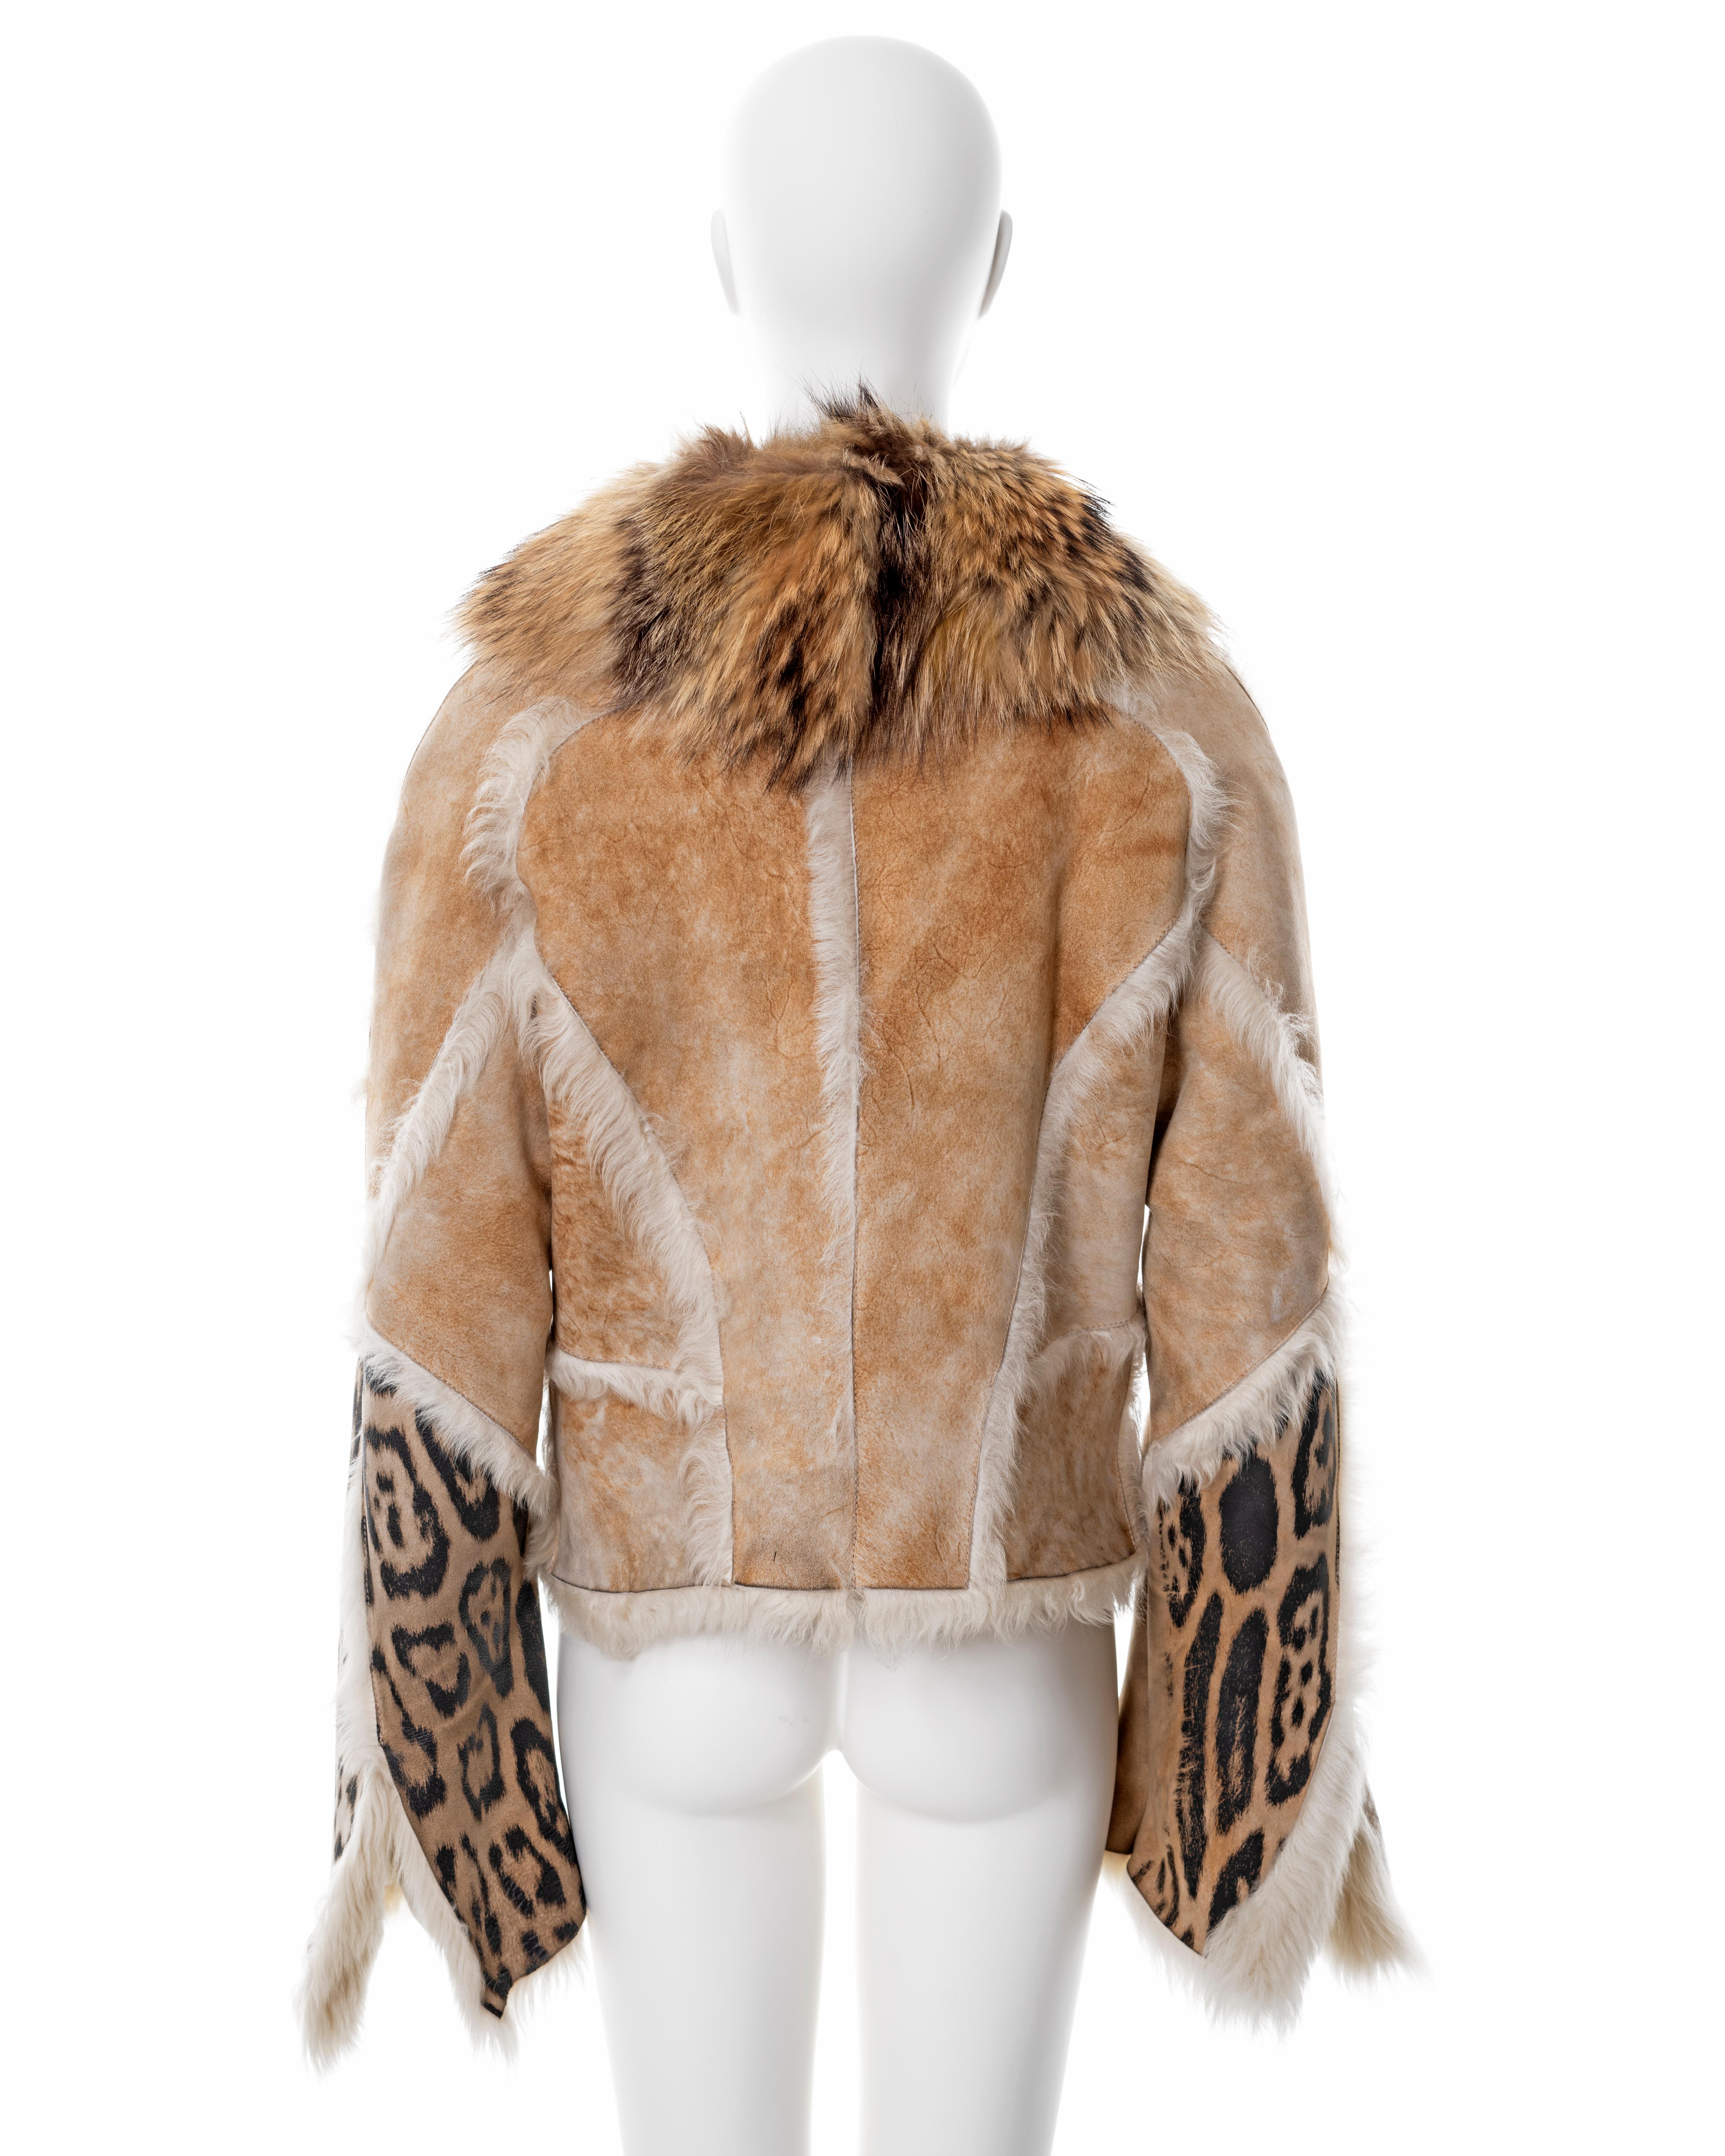 Roberto Cavalli leopard print sheepskin jacket with fox fur collar, fw 2001 4